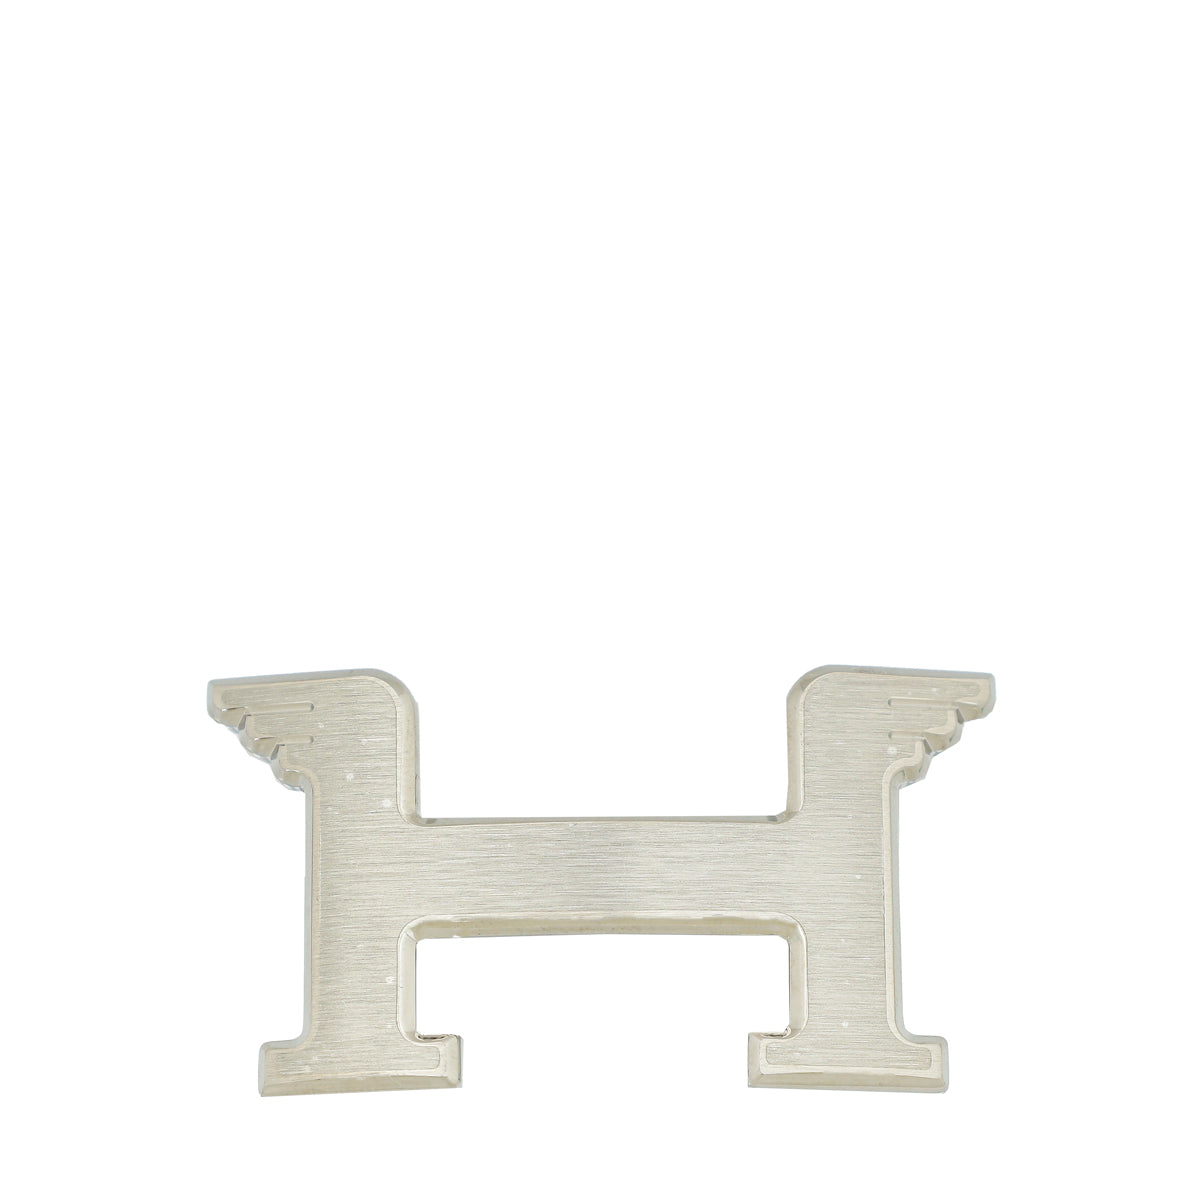 Hermes H Brushed Palladium Plated 32mm Belt Buckle